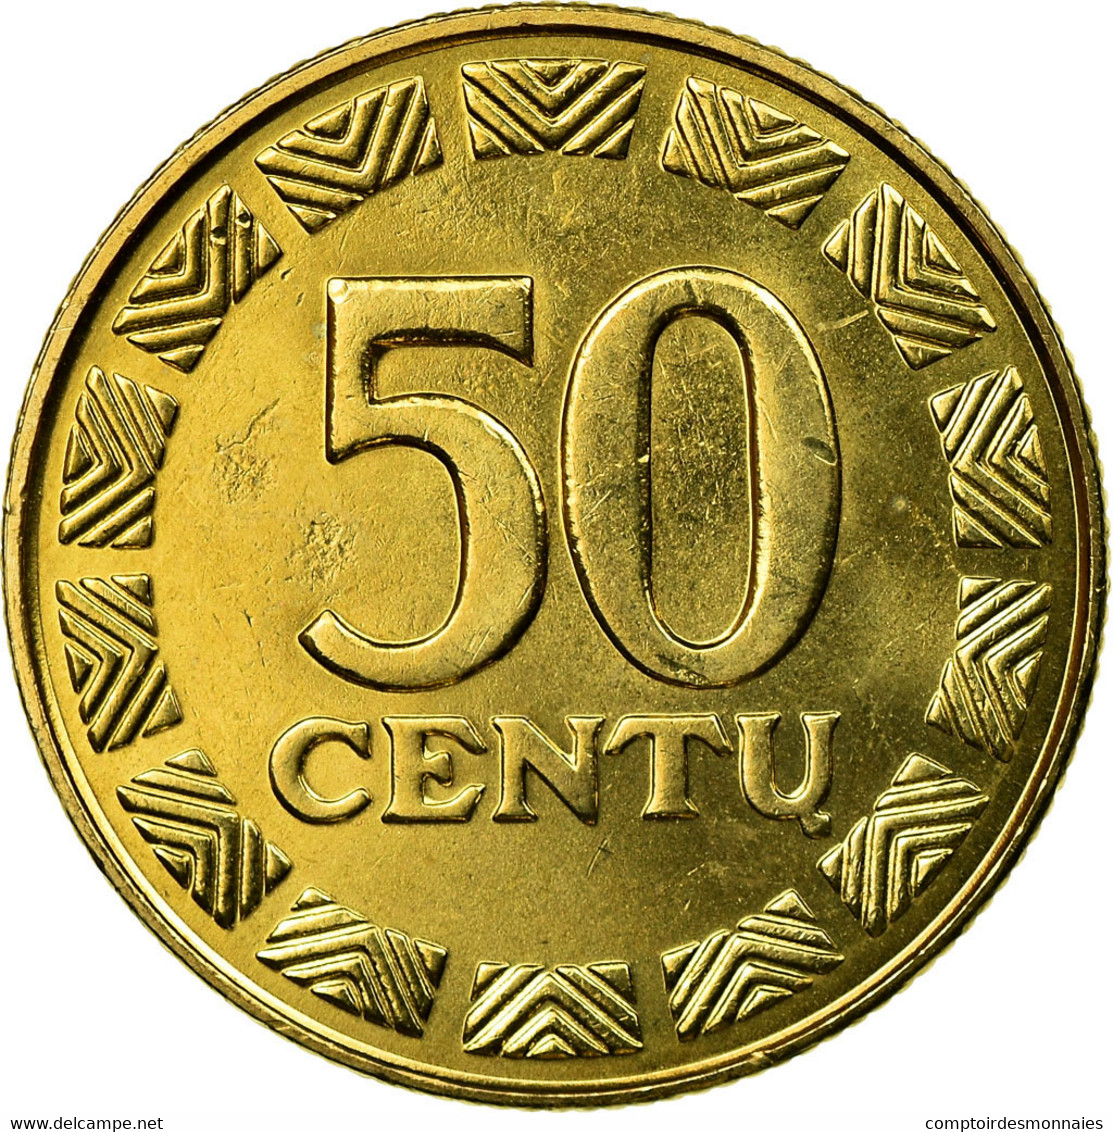 Monnaie, Lithuania, 50 Centu, 2000, SUP, Nickel-brass, KM:108 - Litouwen